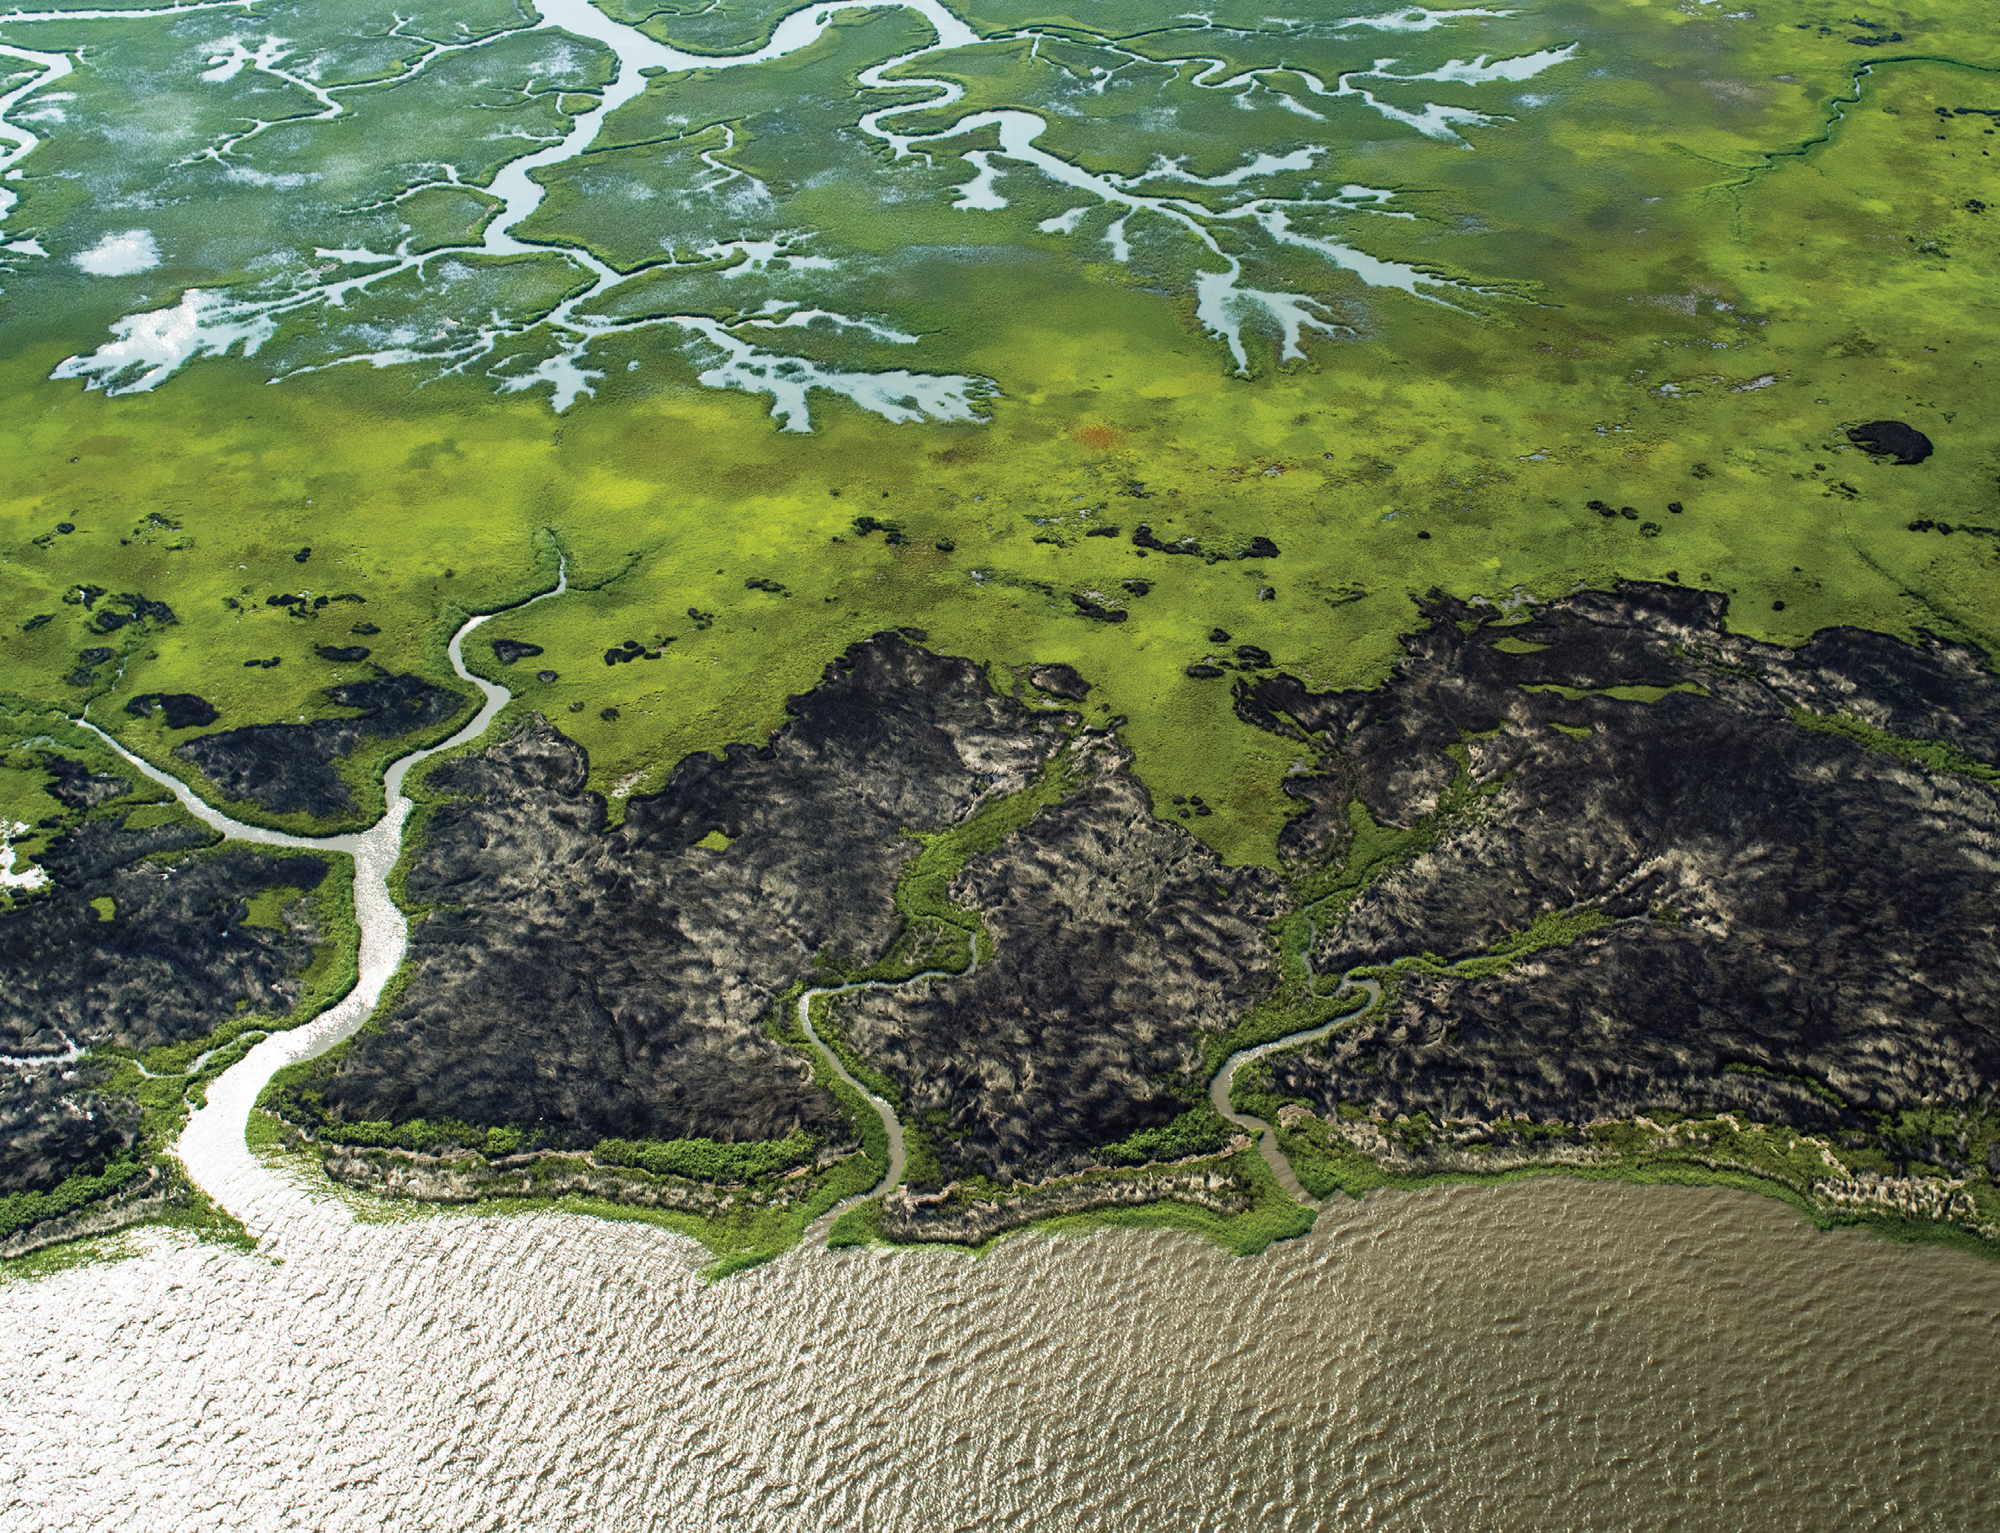 Coastal Wetlands Meet the Ocean (Winyah Bay National Estuarine Research Reserve; July 2, 2015)